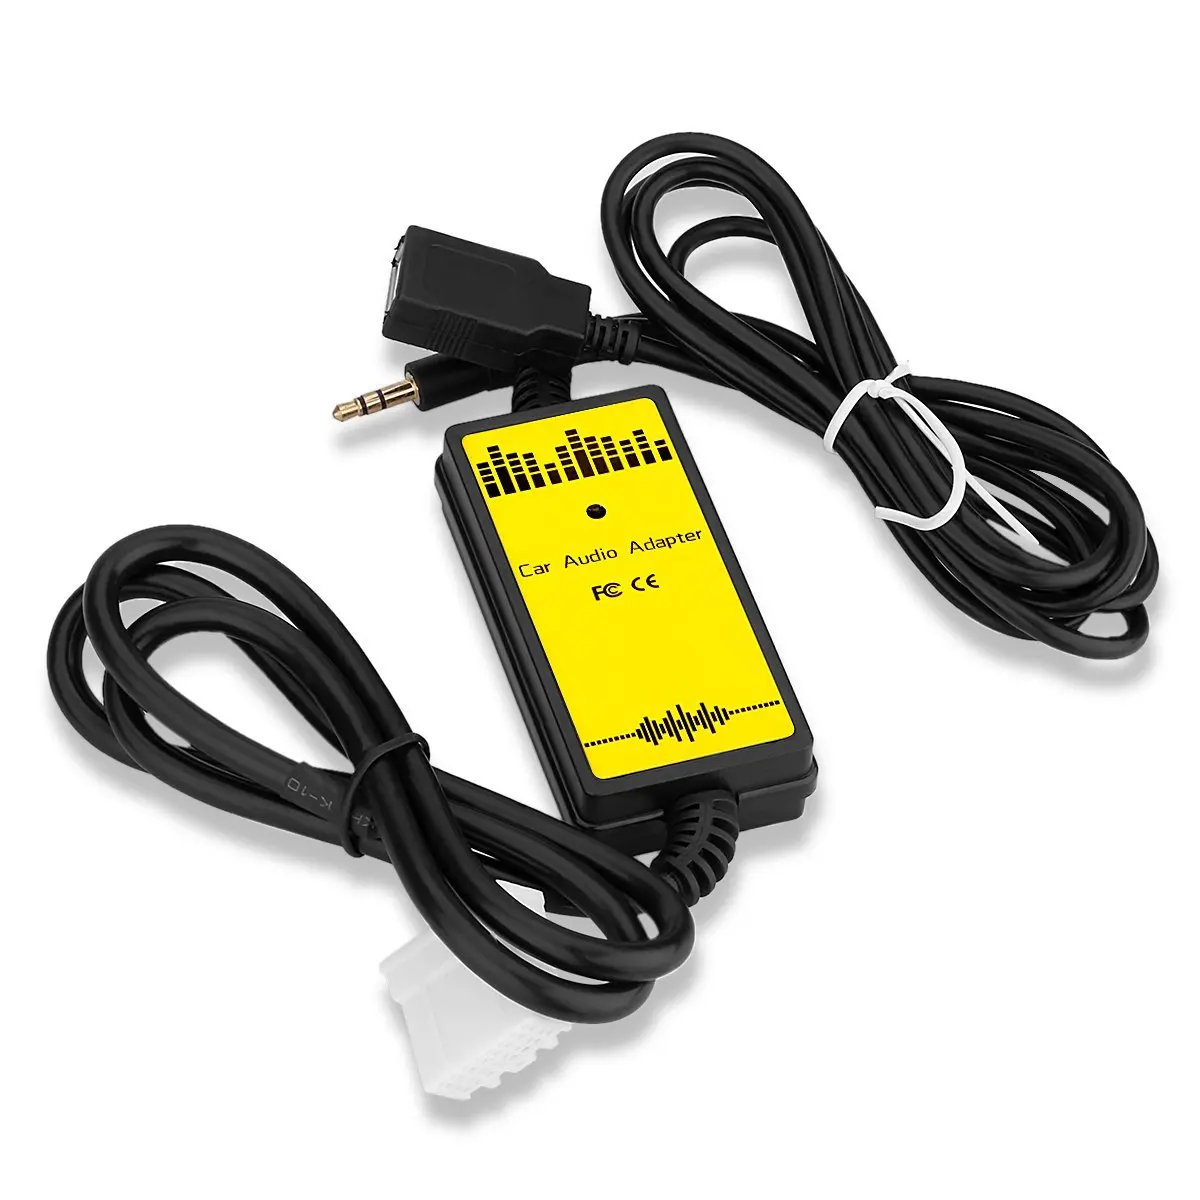 Buy USB SD AUX MP3 Adapter + Bluetooth handsfree car kit